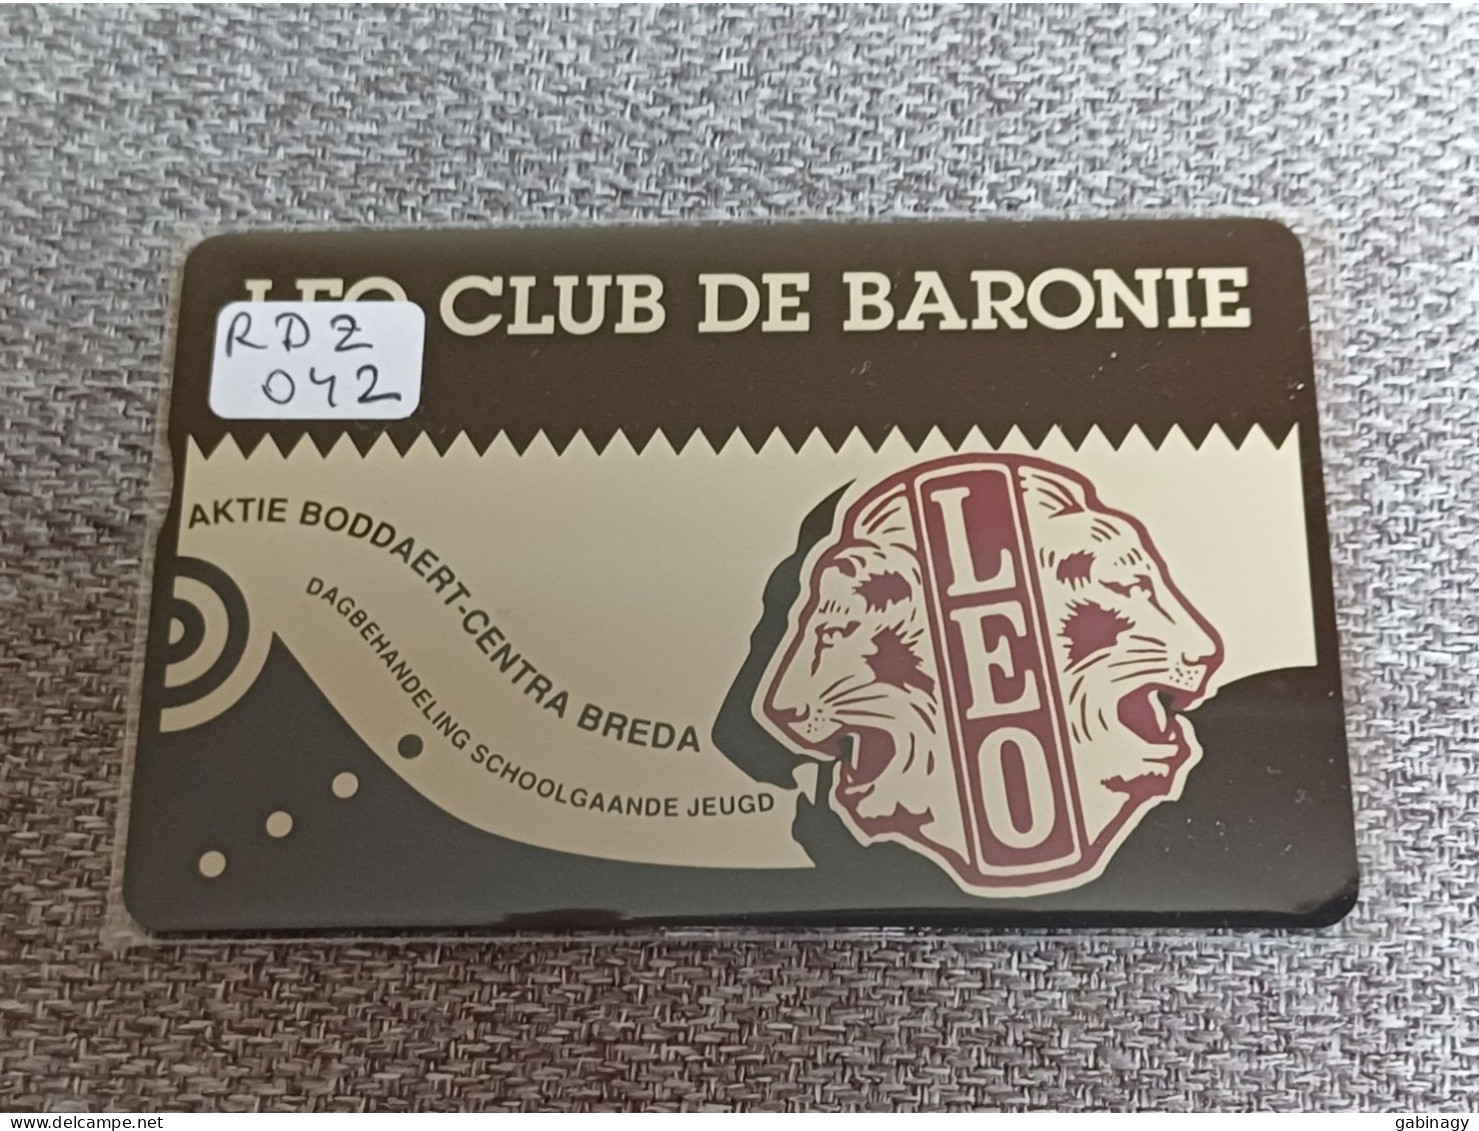 NETHERLANDS - RDZ042 - Leo Club De Baronie - 1.000 EX. - Private